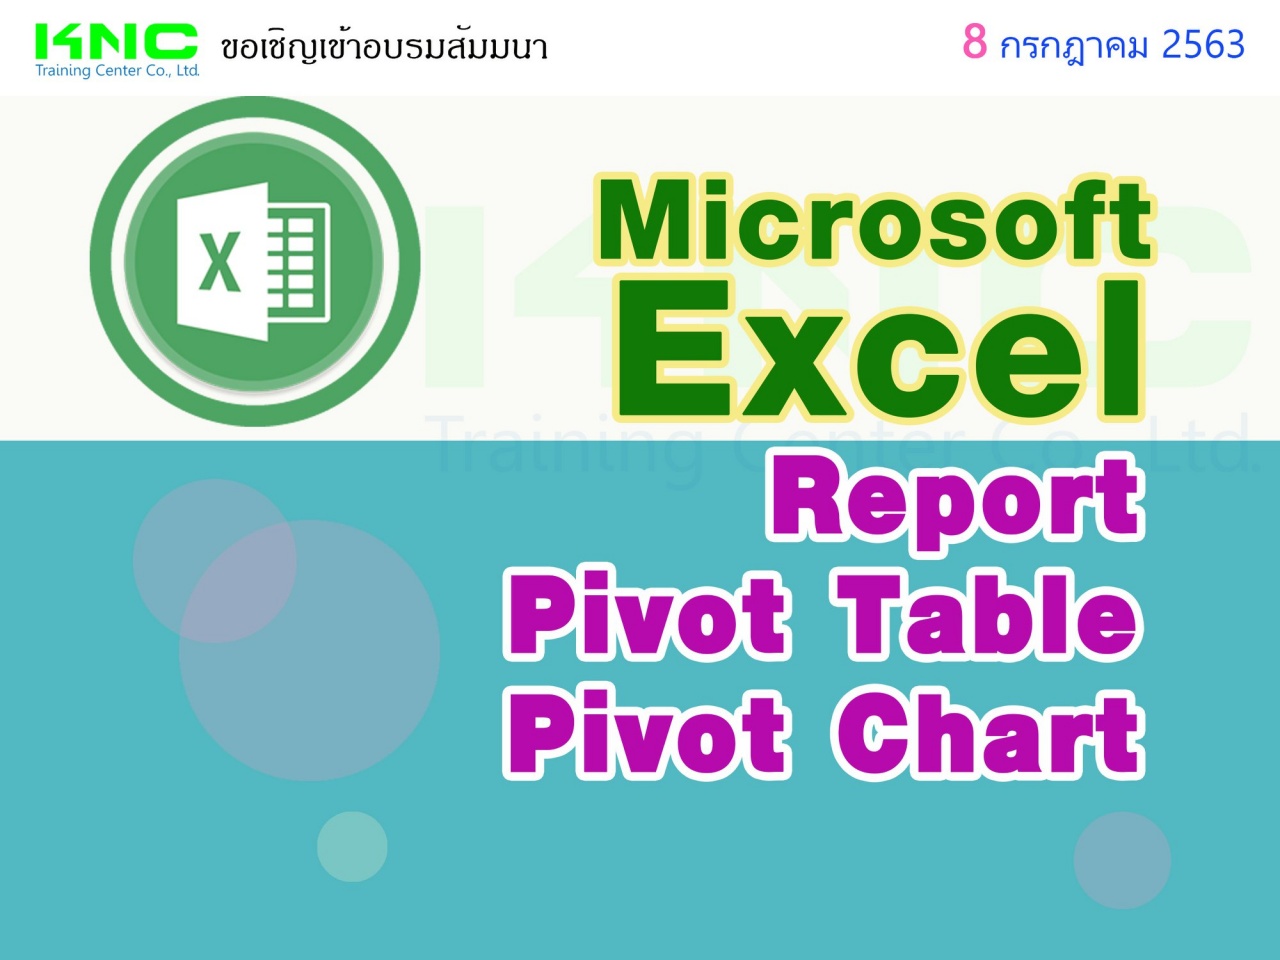 Microsoft Excel : Report & Pivot Table & Pivot Chart